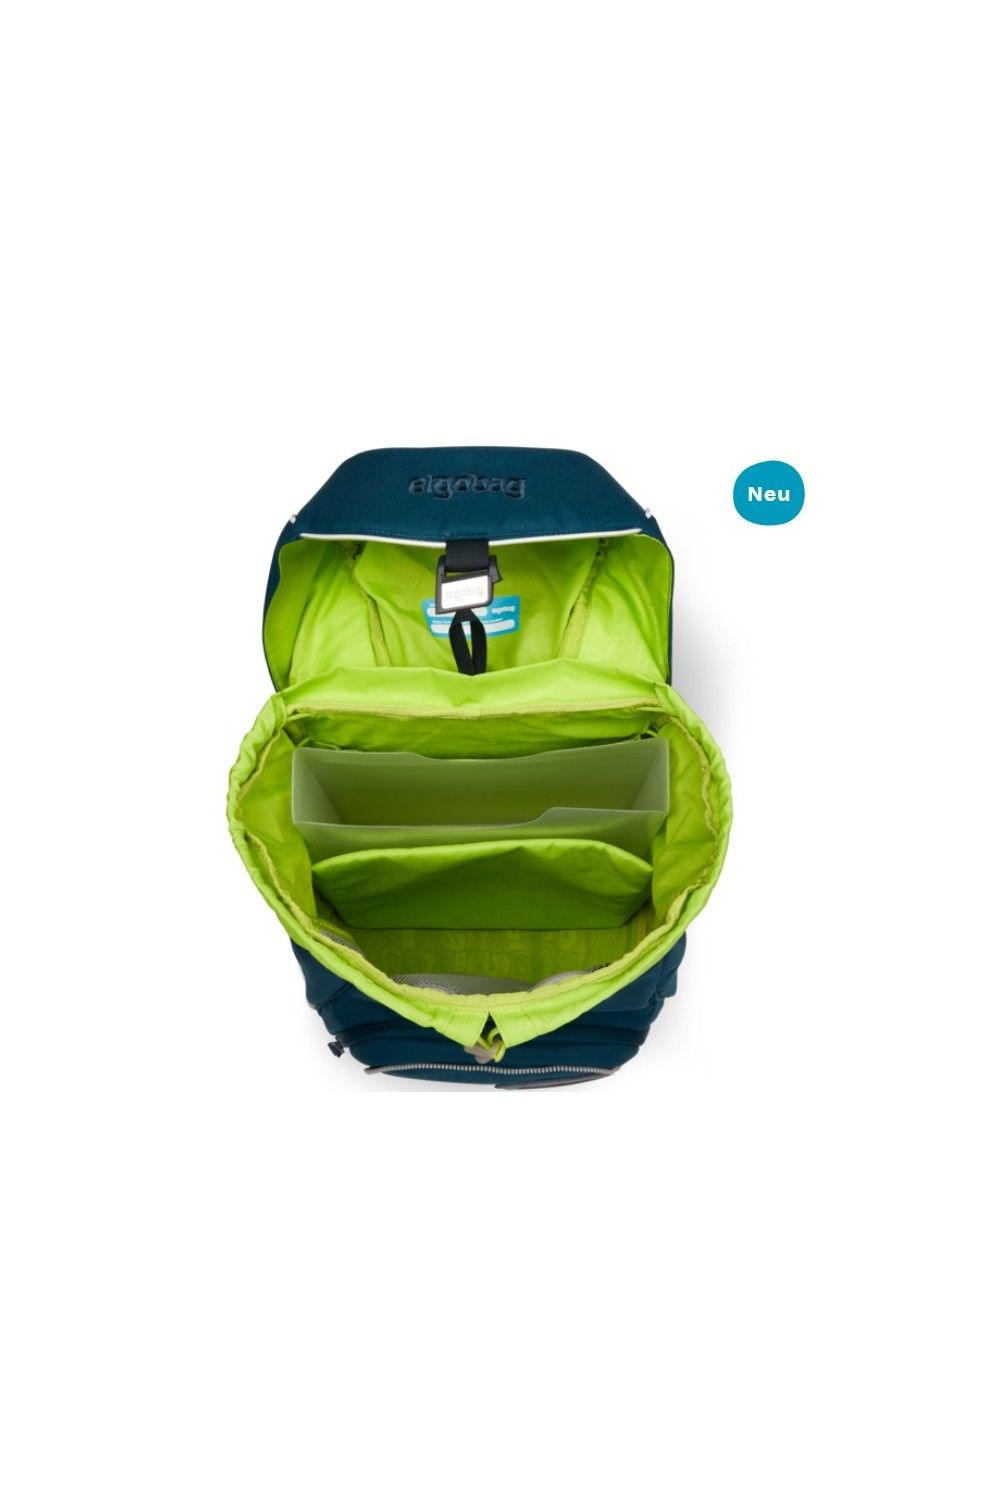 ergobag pack school backpack set Green MamBear